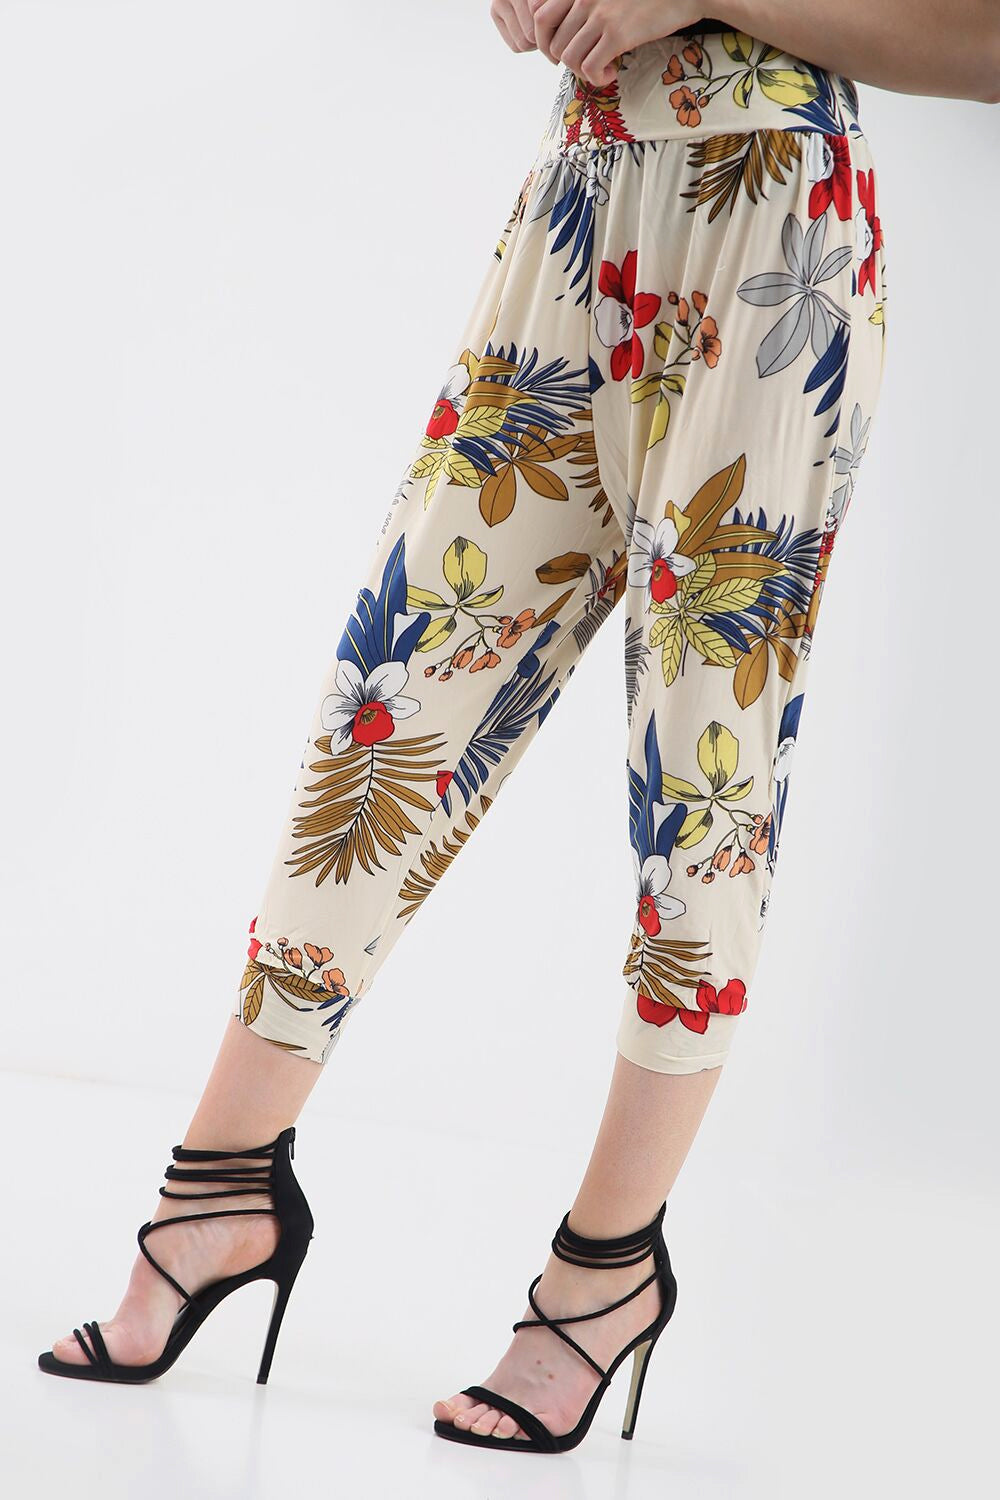 High Waisted Floral Print Cuffed Leg Pants - bejealous-com